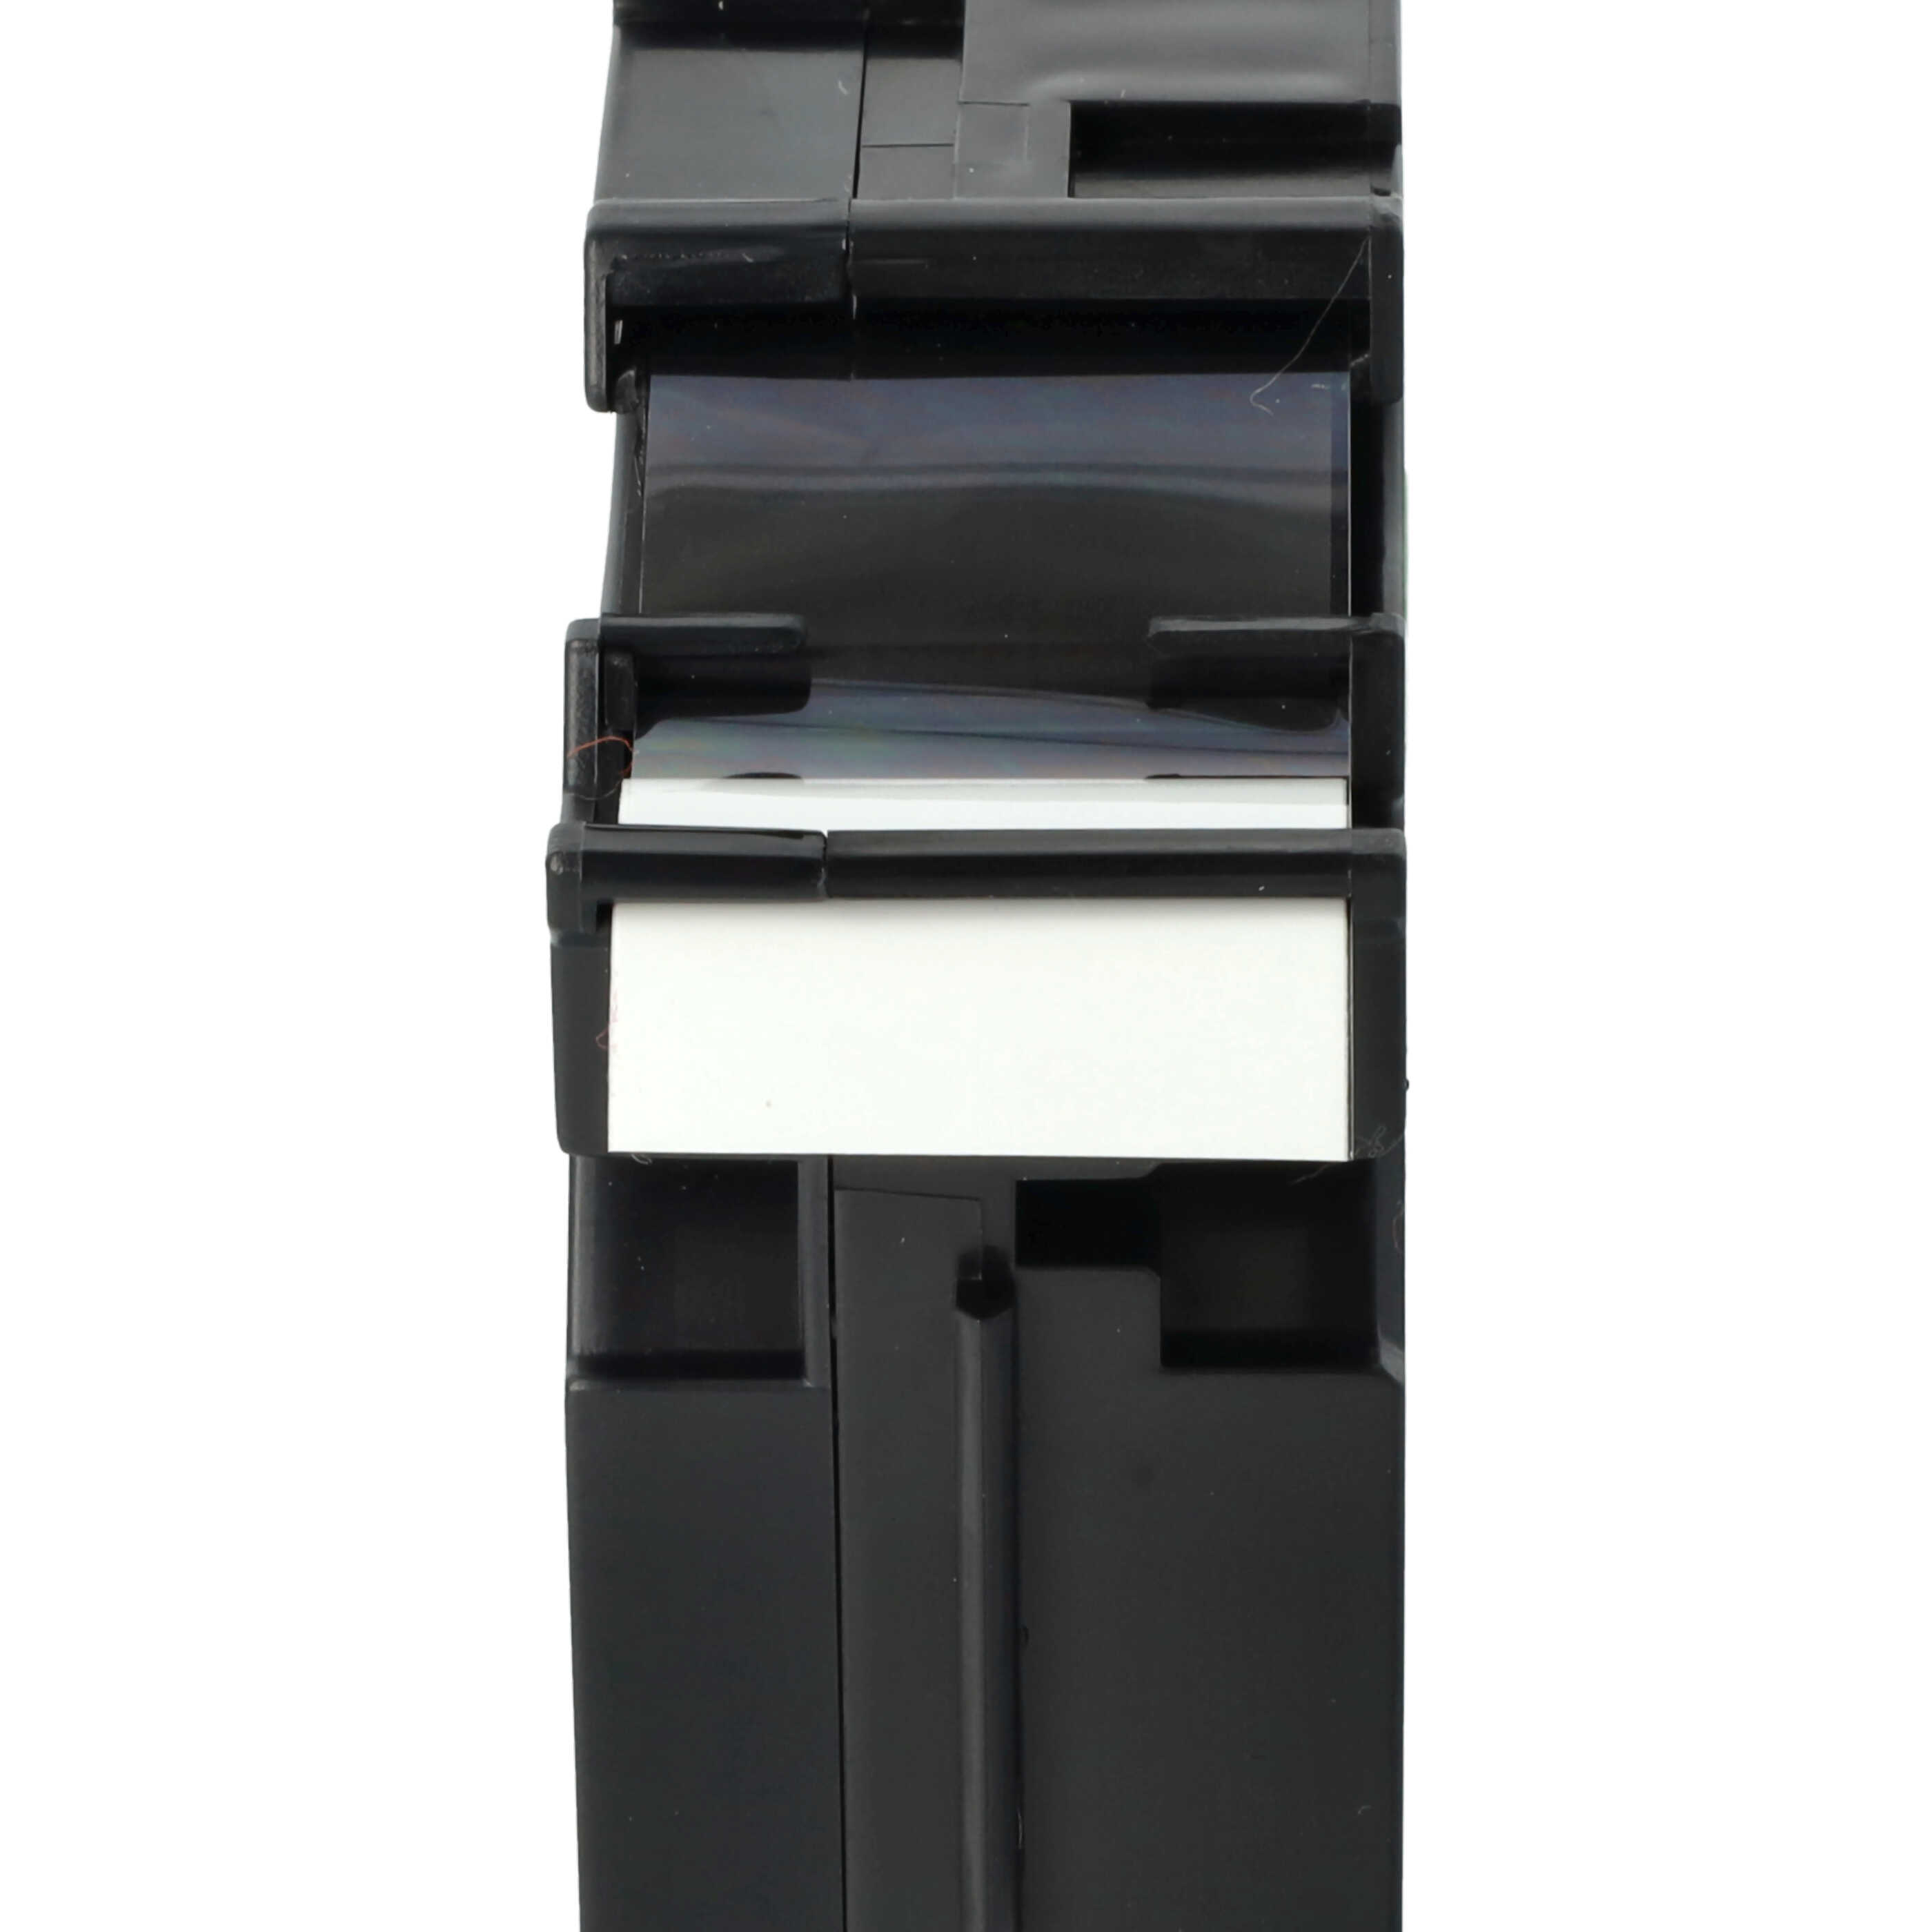 10x Casete cinta escritura reemplaza Brother TZE-251 Negro su Blanco